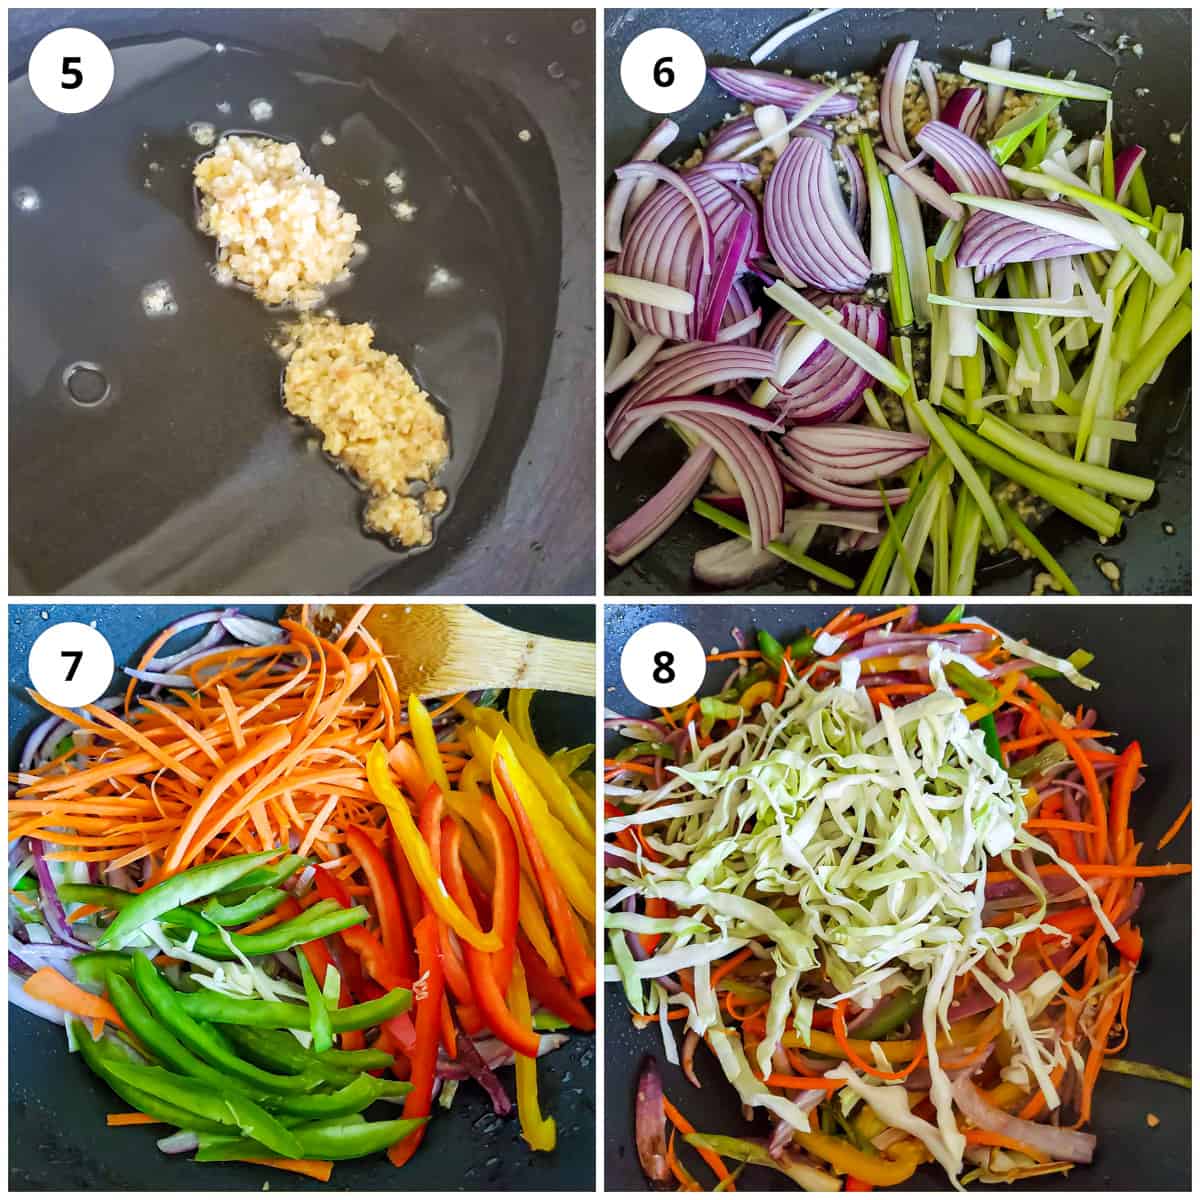 Step wise pic for making hakka noodles recipe, adding aromatics and veggies